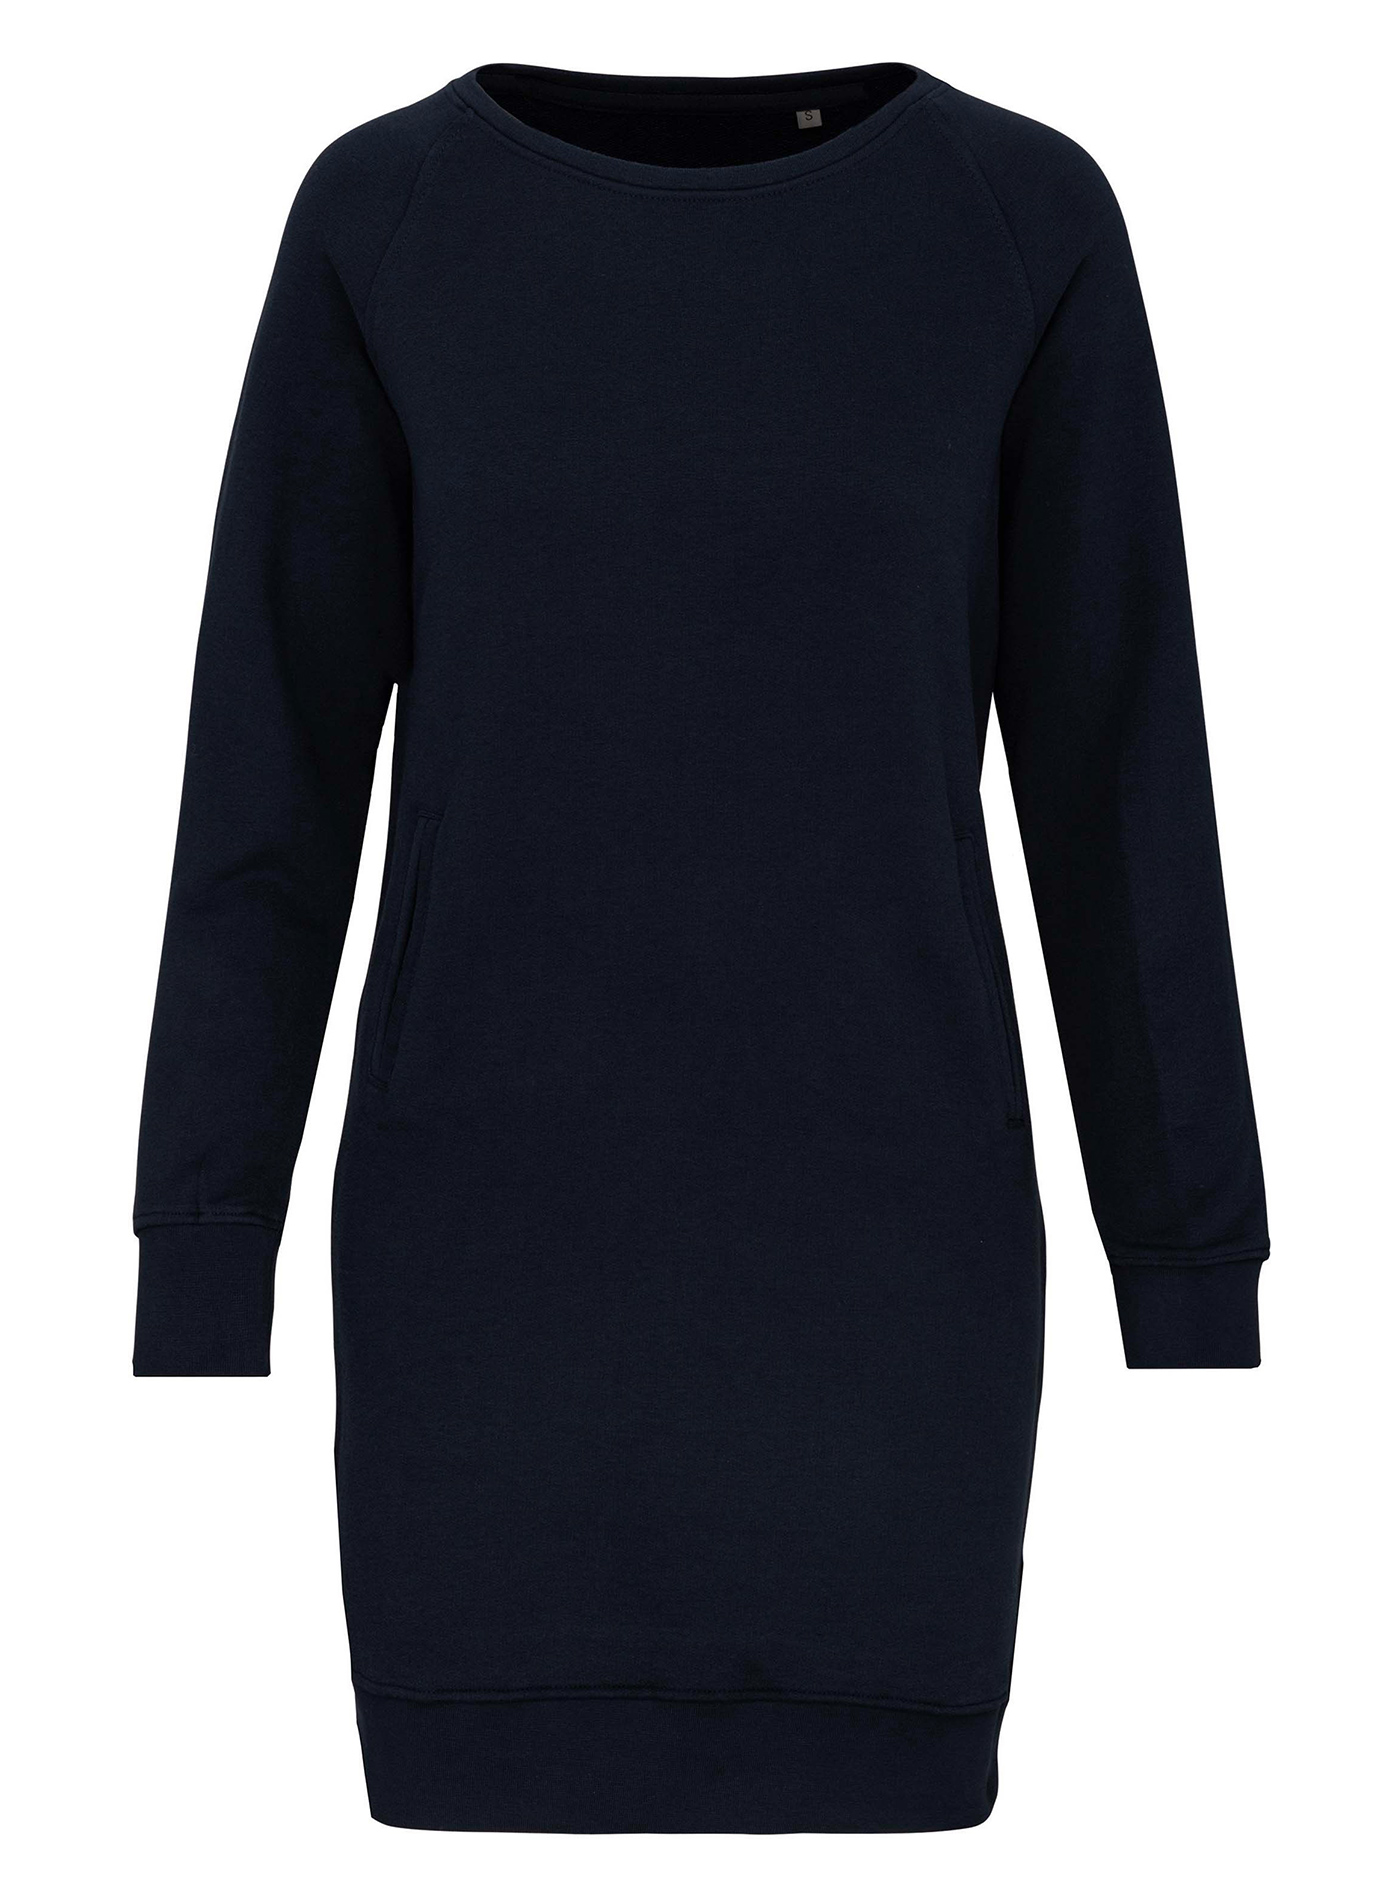 Dámské šaty Organic - Námořnická modrá XL